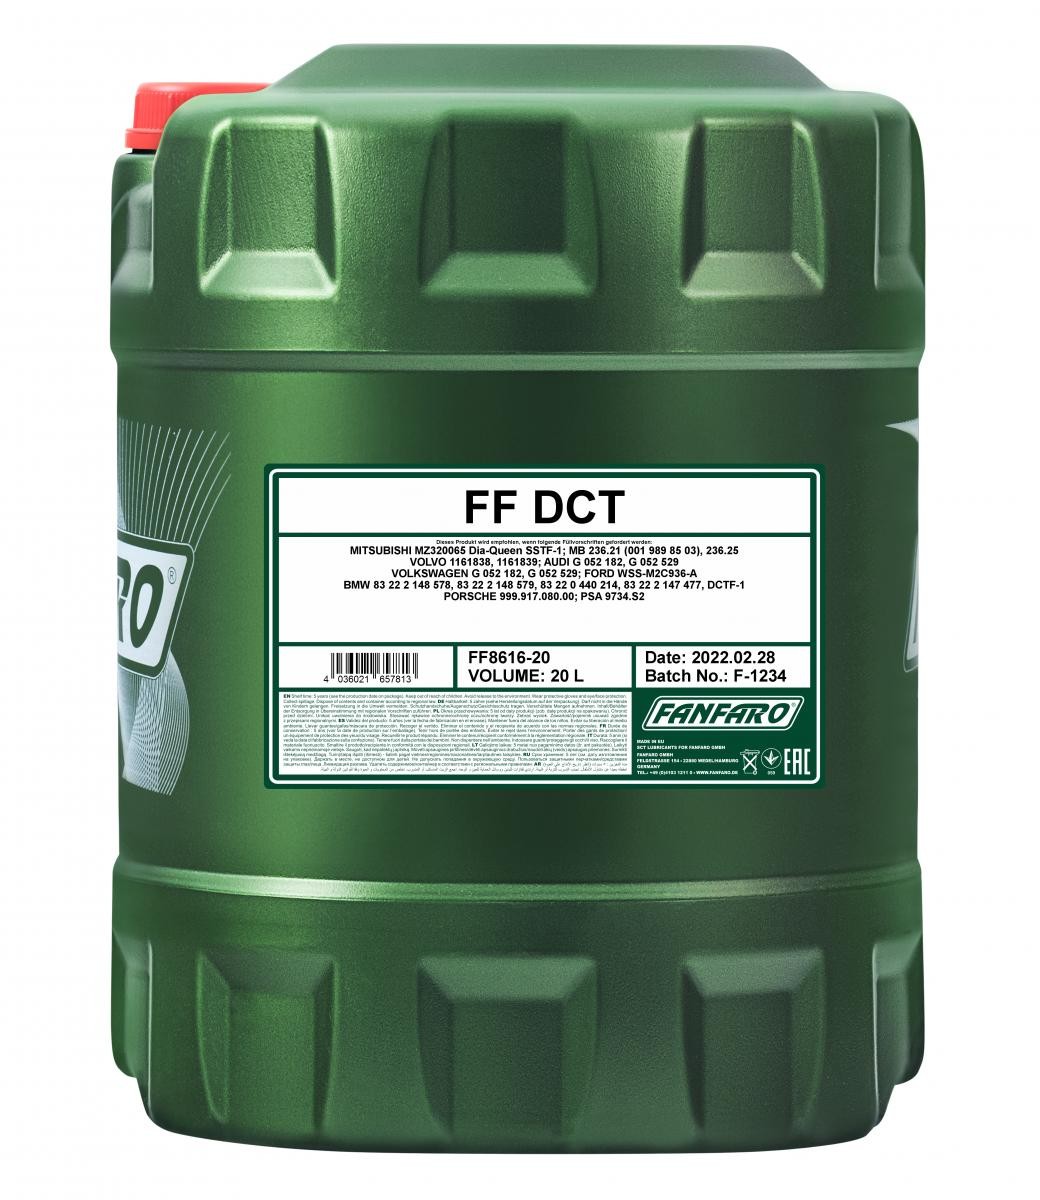 FF8616-20 FANFARO Gearbox oil MAZDA Capacity: 20l, ATF DCT